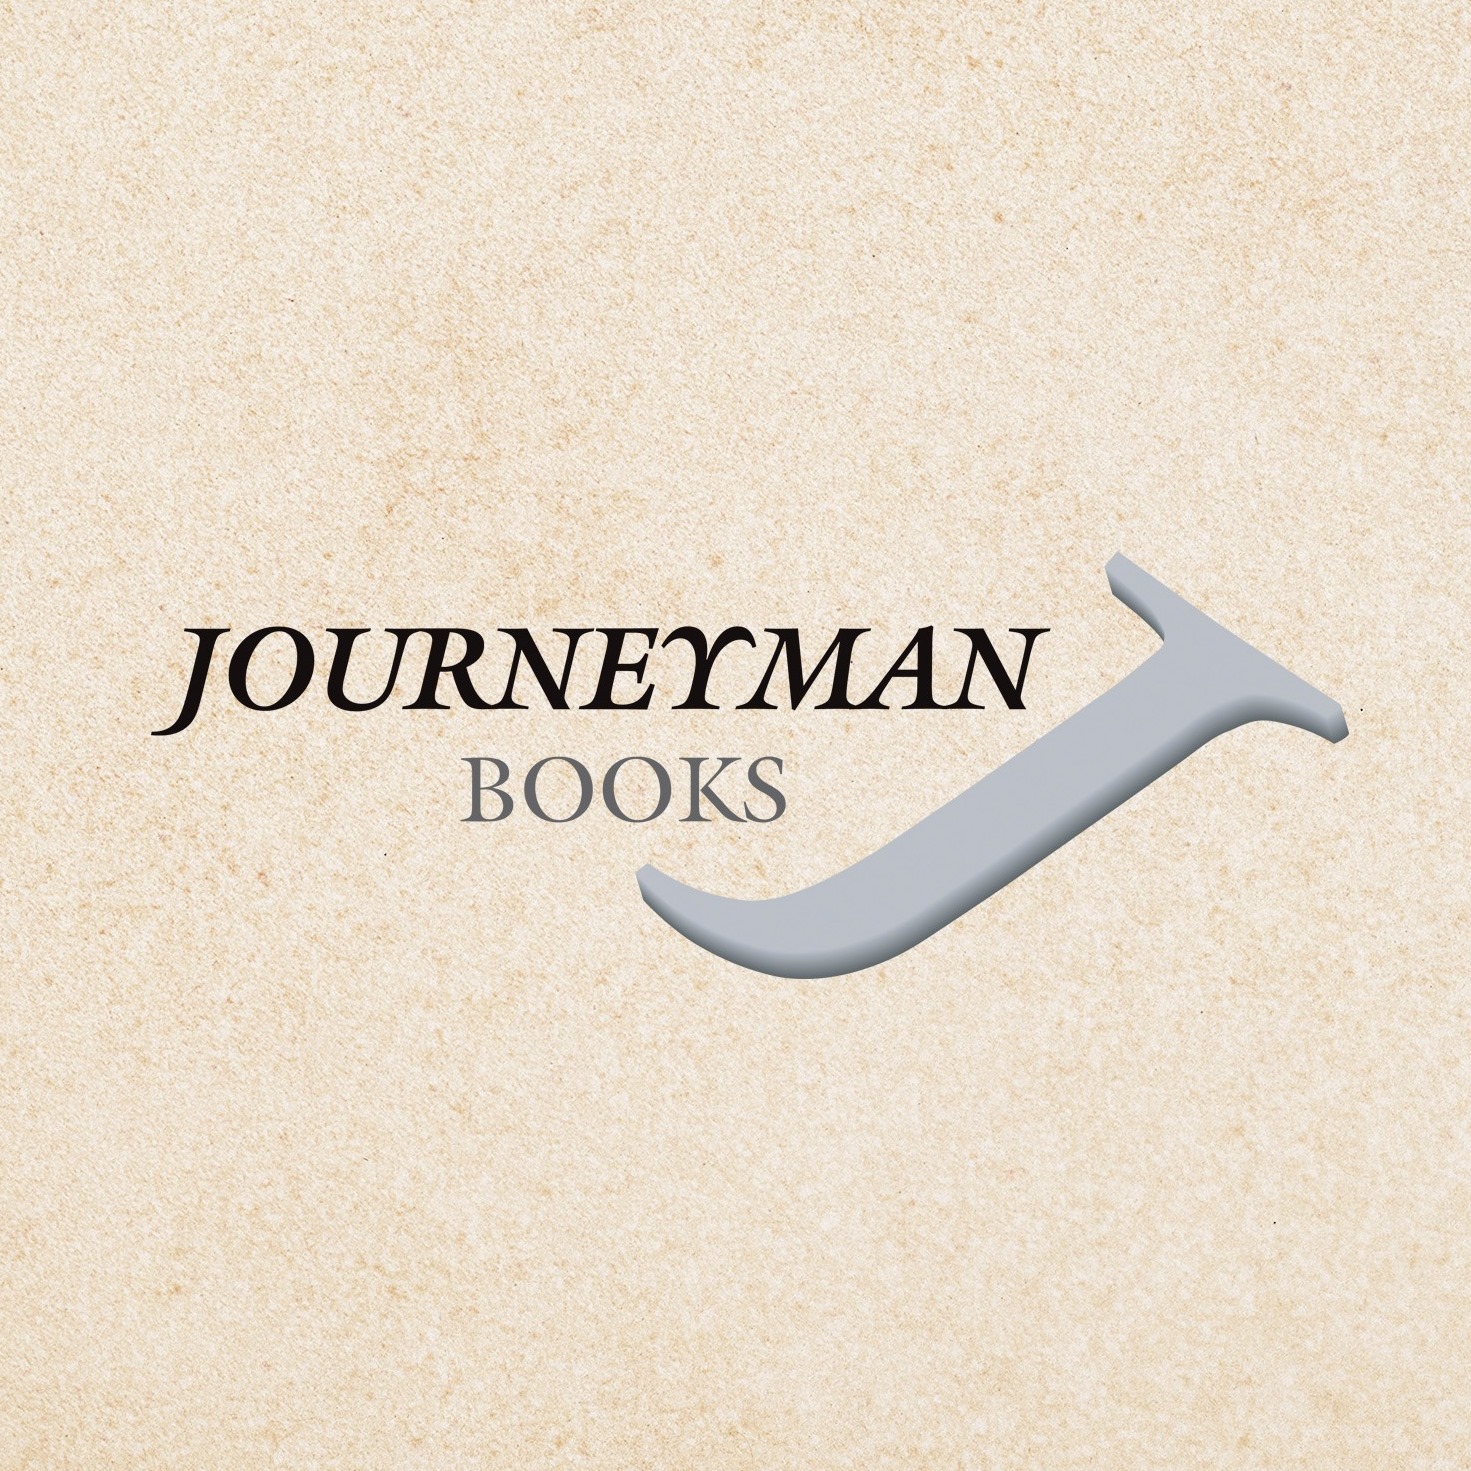 Journeyman Books